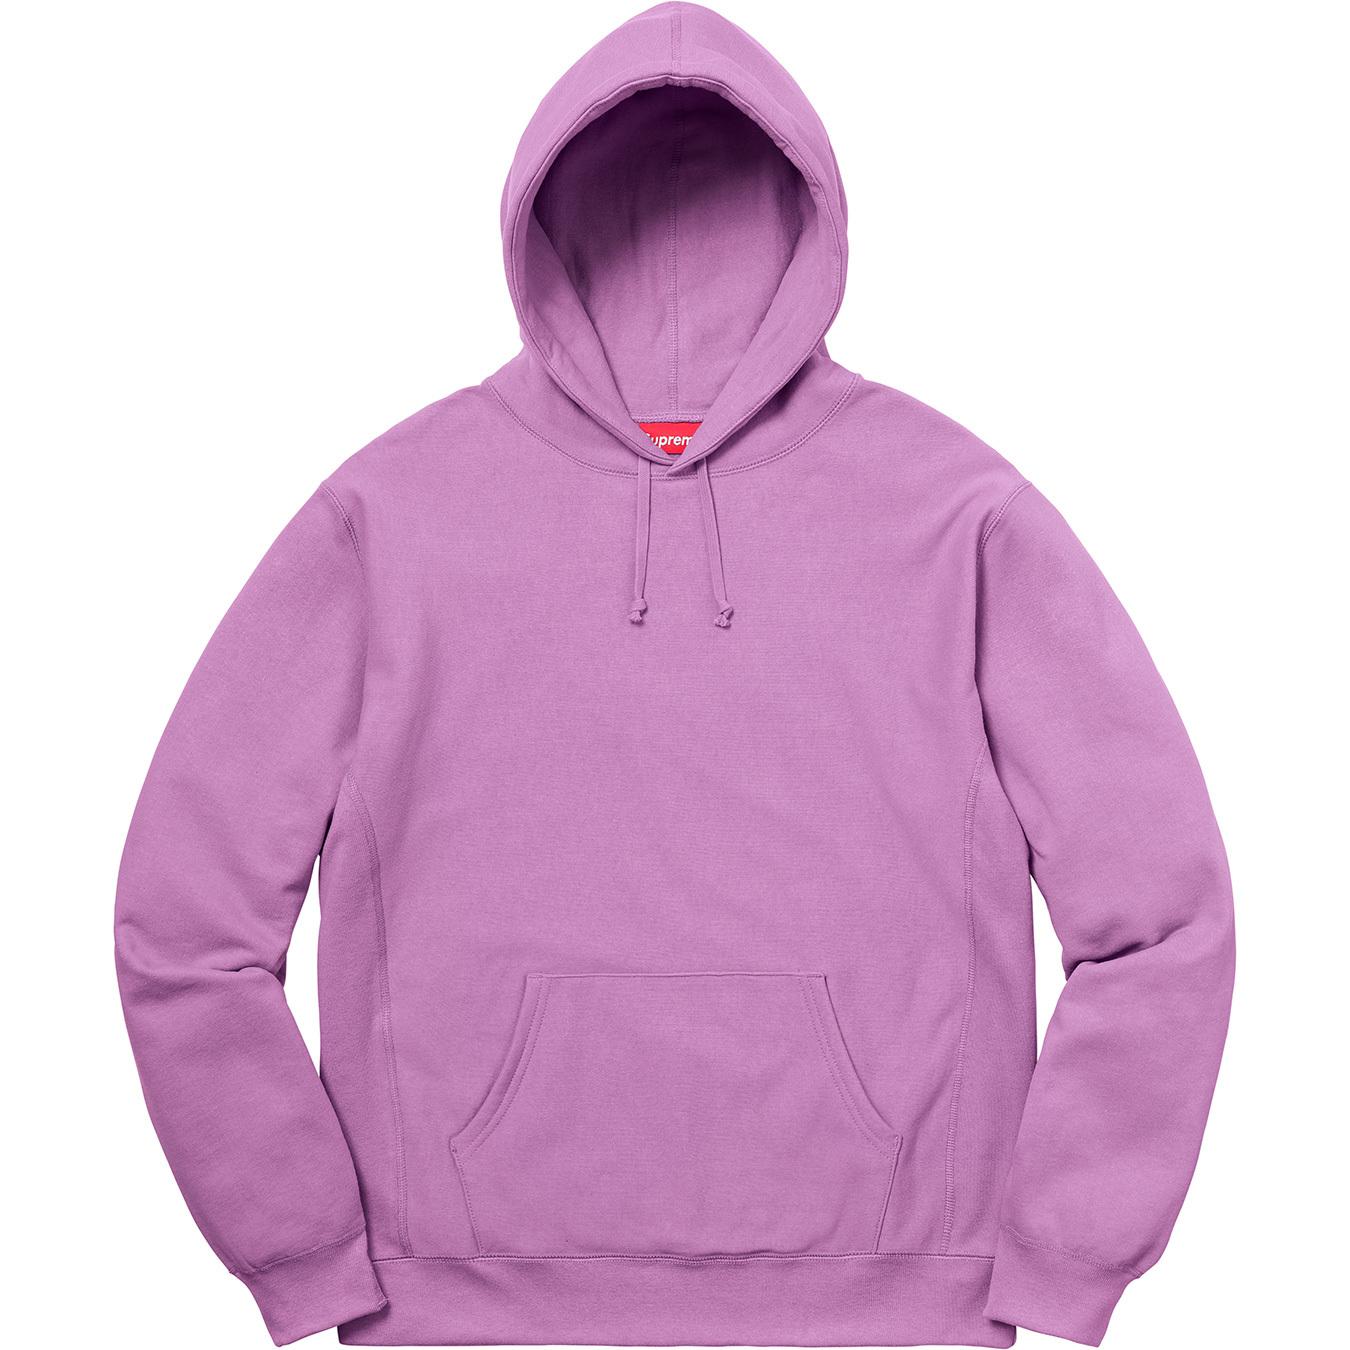 Lyst - Supreme Studded Hooded Sweatshirt Violet in Purple for Men